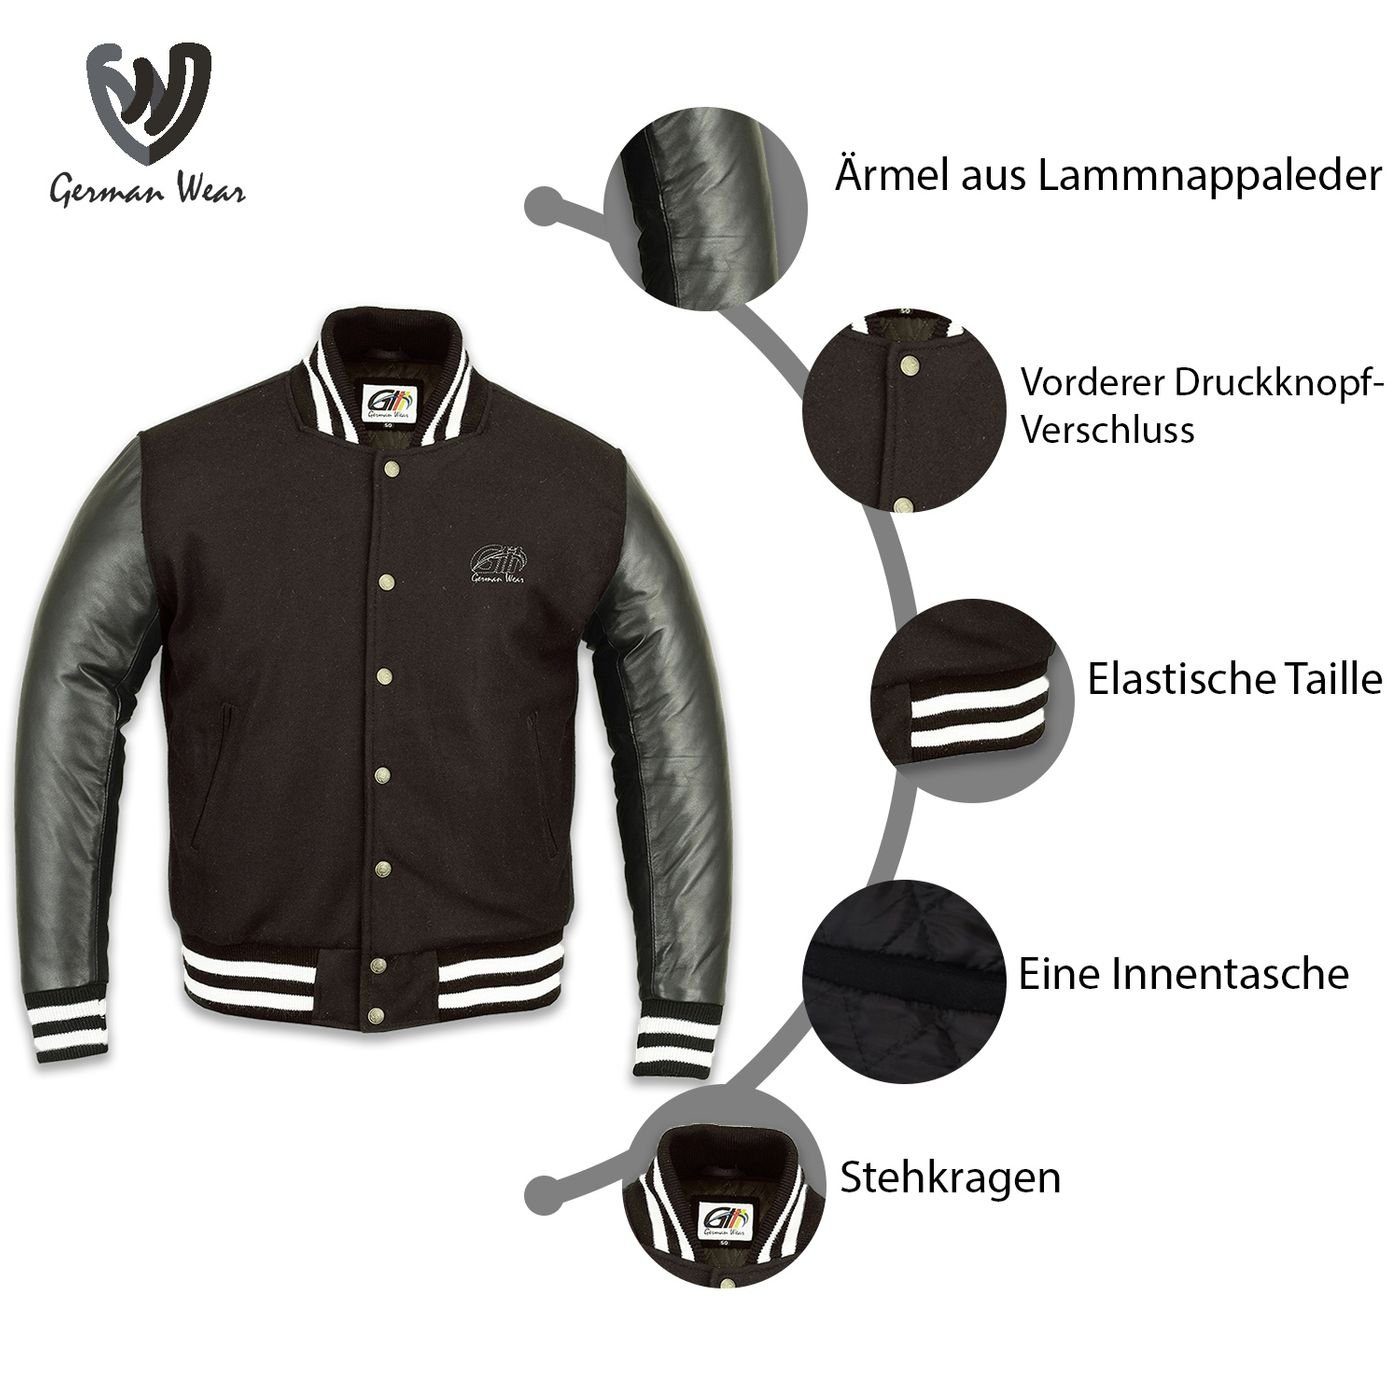 Collegejacke Wear Wolljacke Blouson Collegejacke Dunkelbraun mit Lederärmel CJ002 German